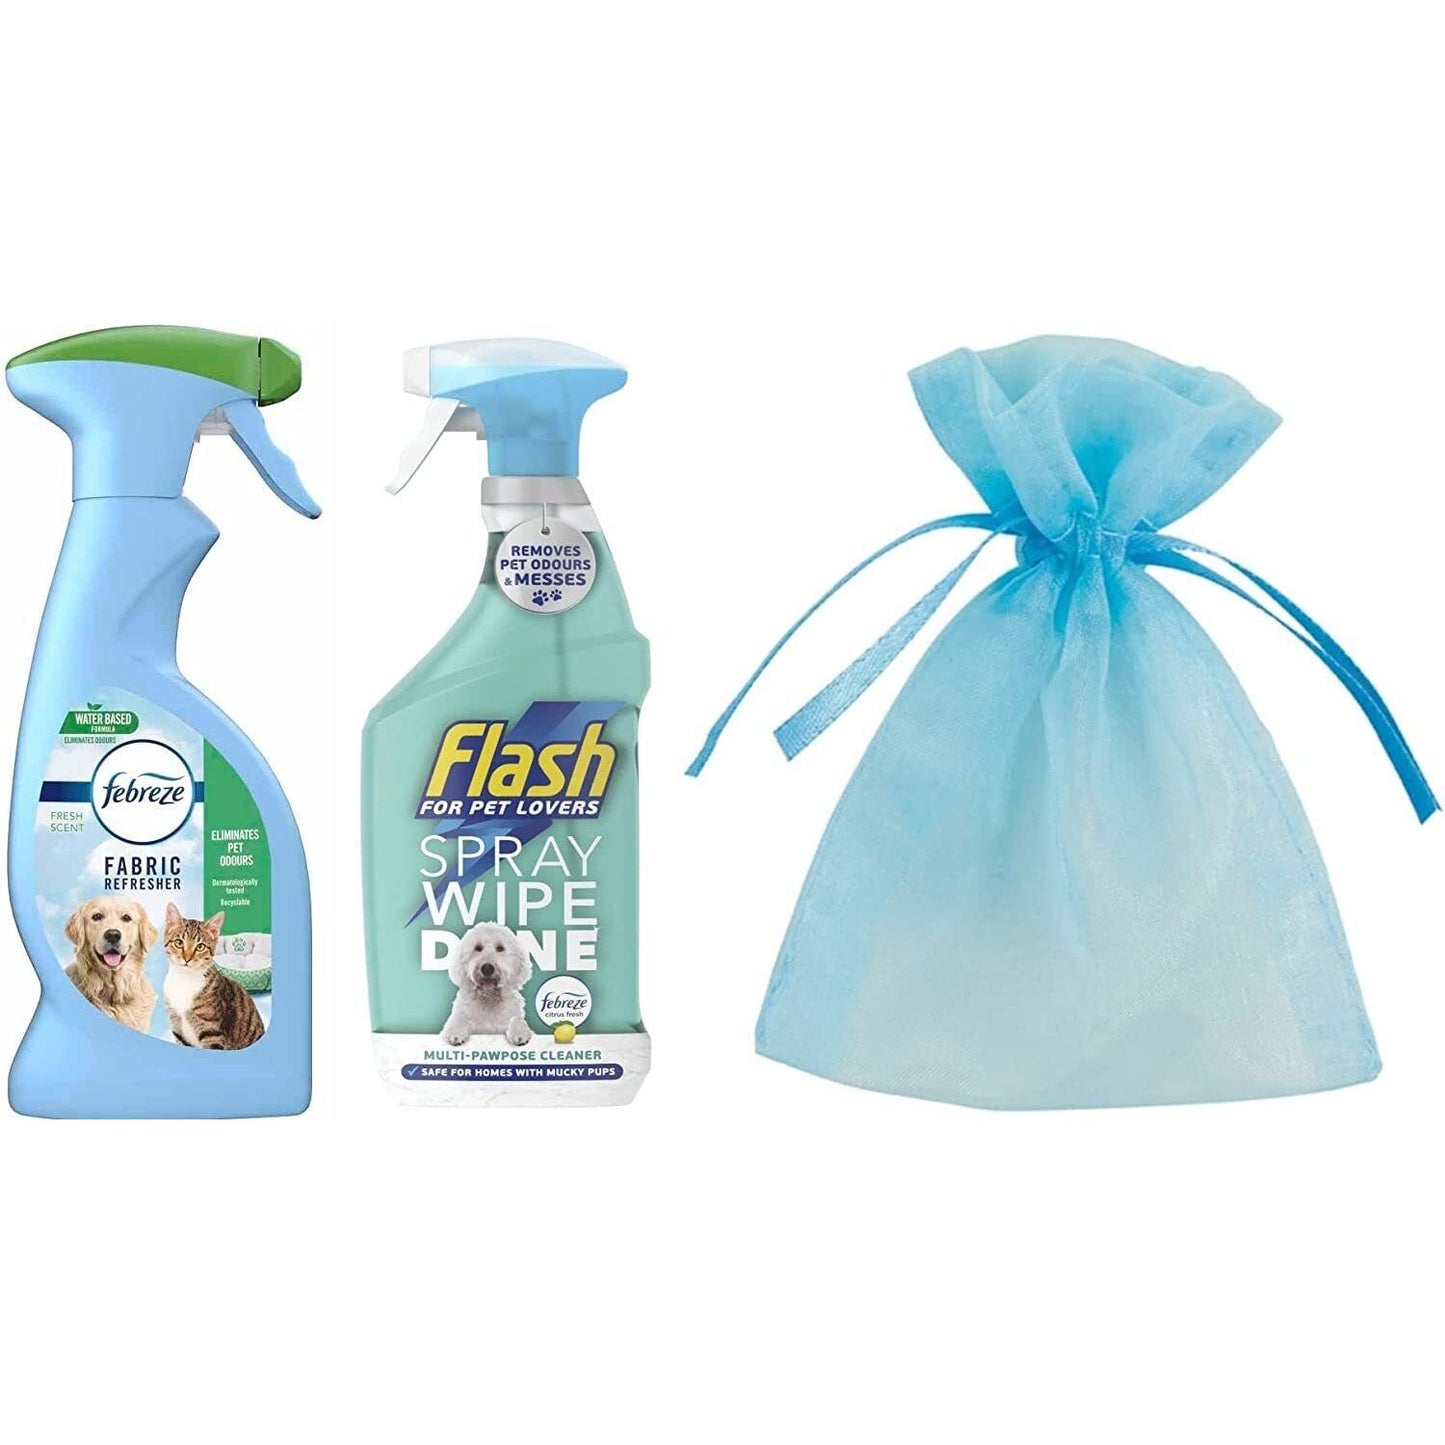 Febreze Fabric 375ml & Flash Wipe Done Spray 800ml Pet Odour Eliminator